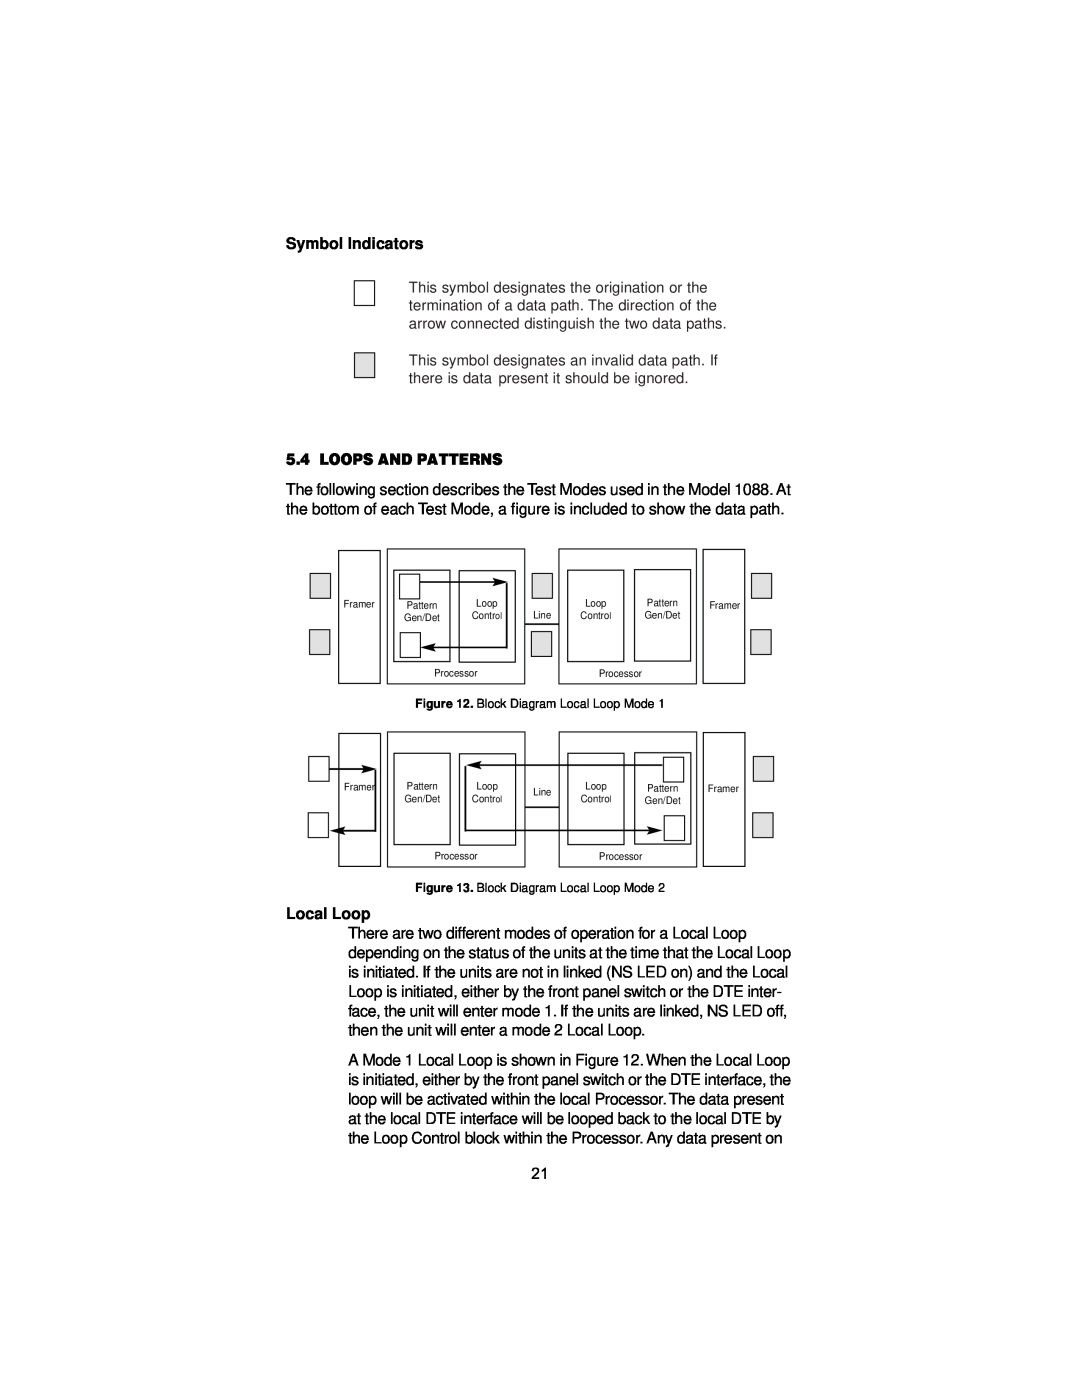 Patton electronic 1088/K user manual Symbol Indicators, Loops And Patterns, Block Diagram Local Loop Mode 